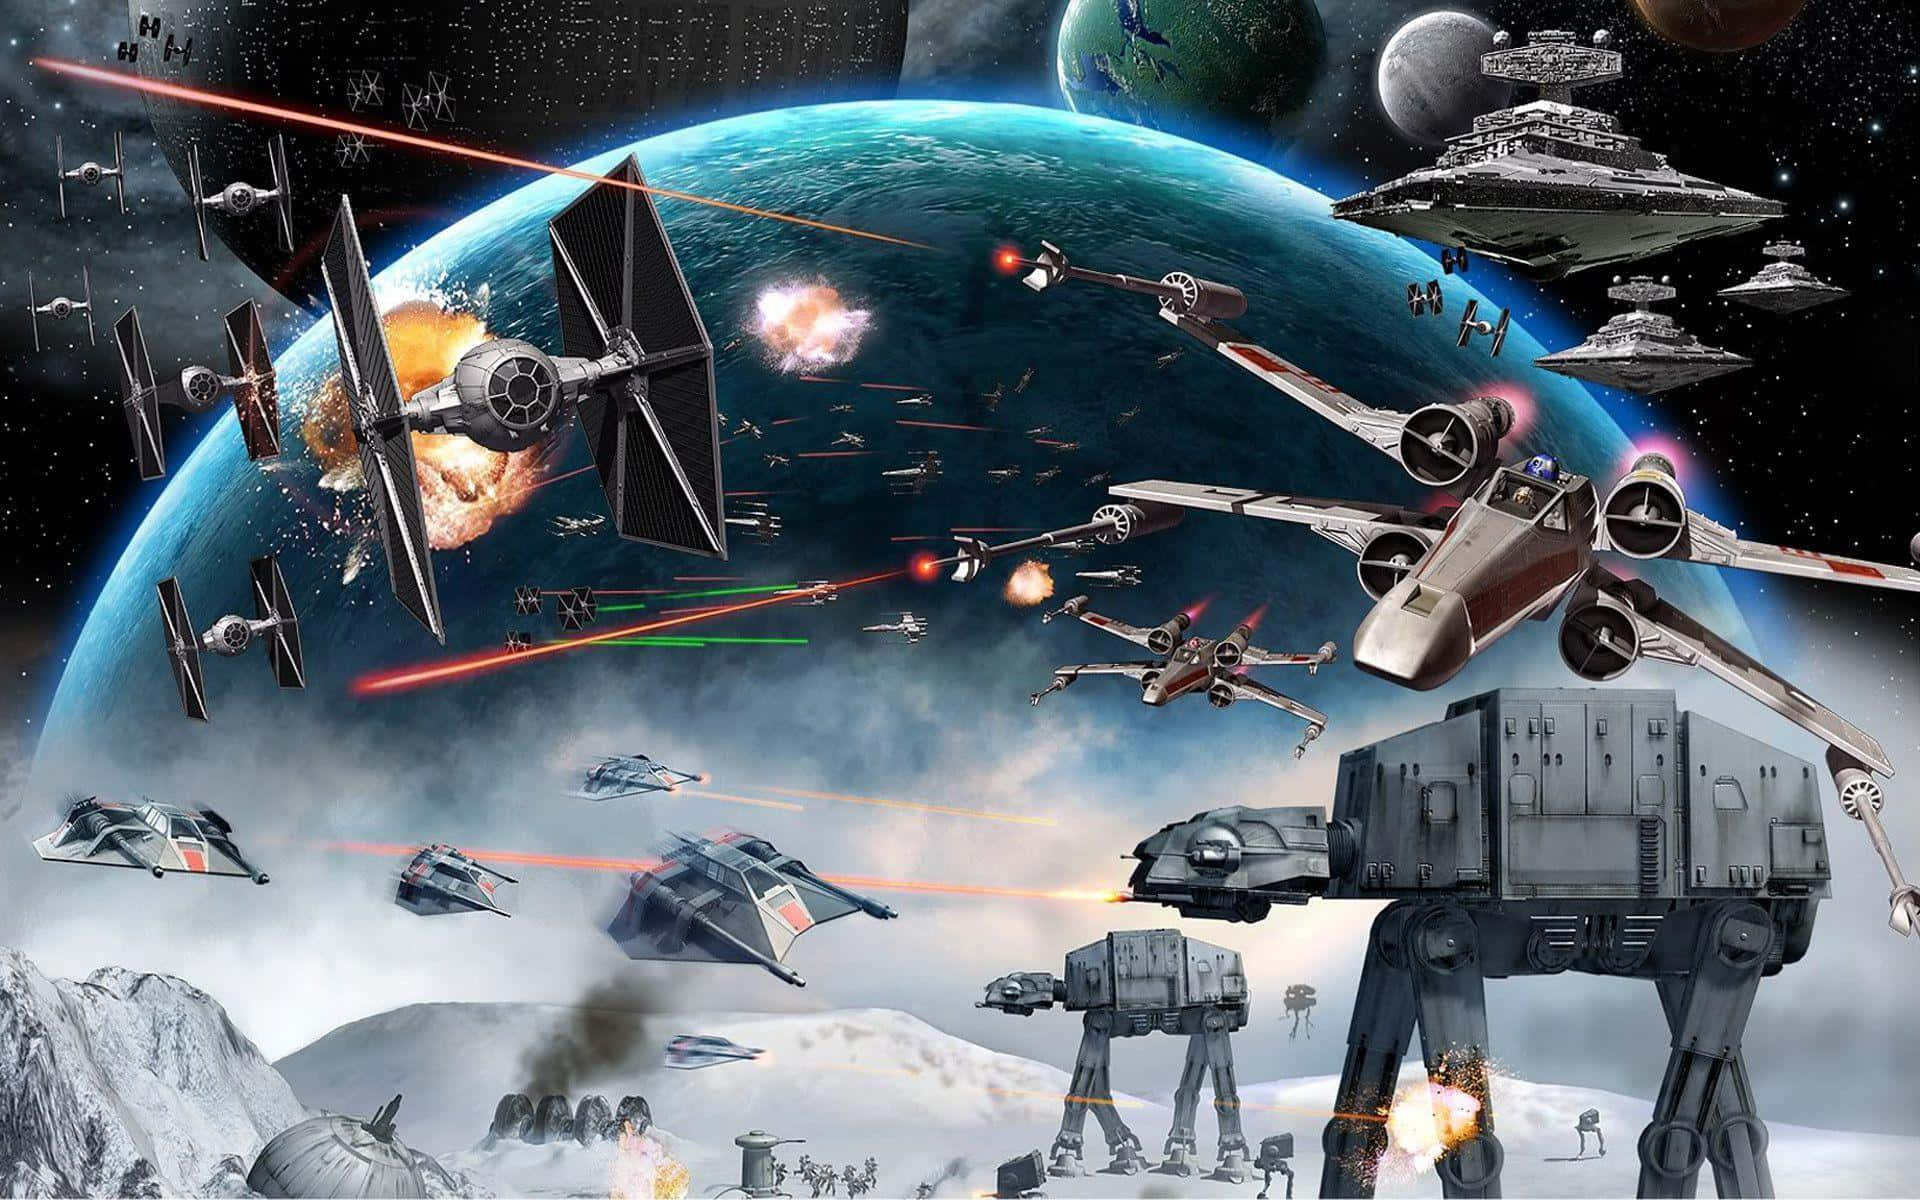 Epic Star Wars Space Battle Art Wallpaper